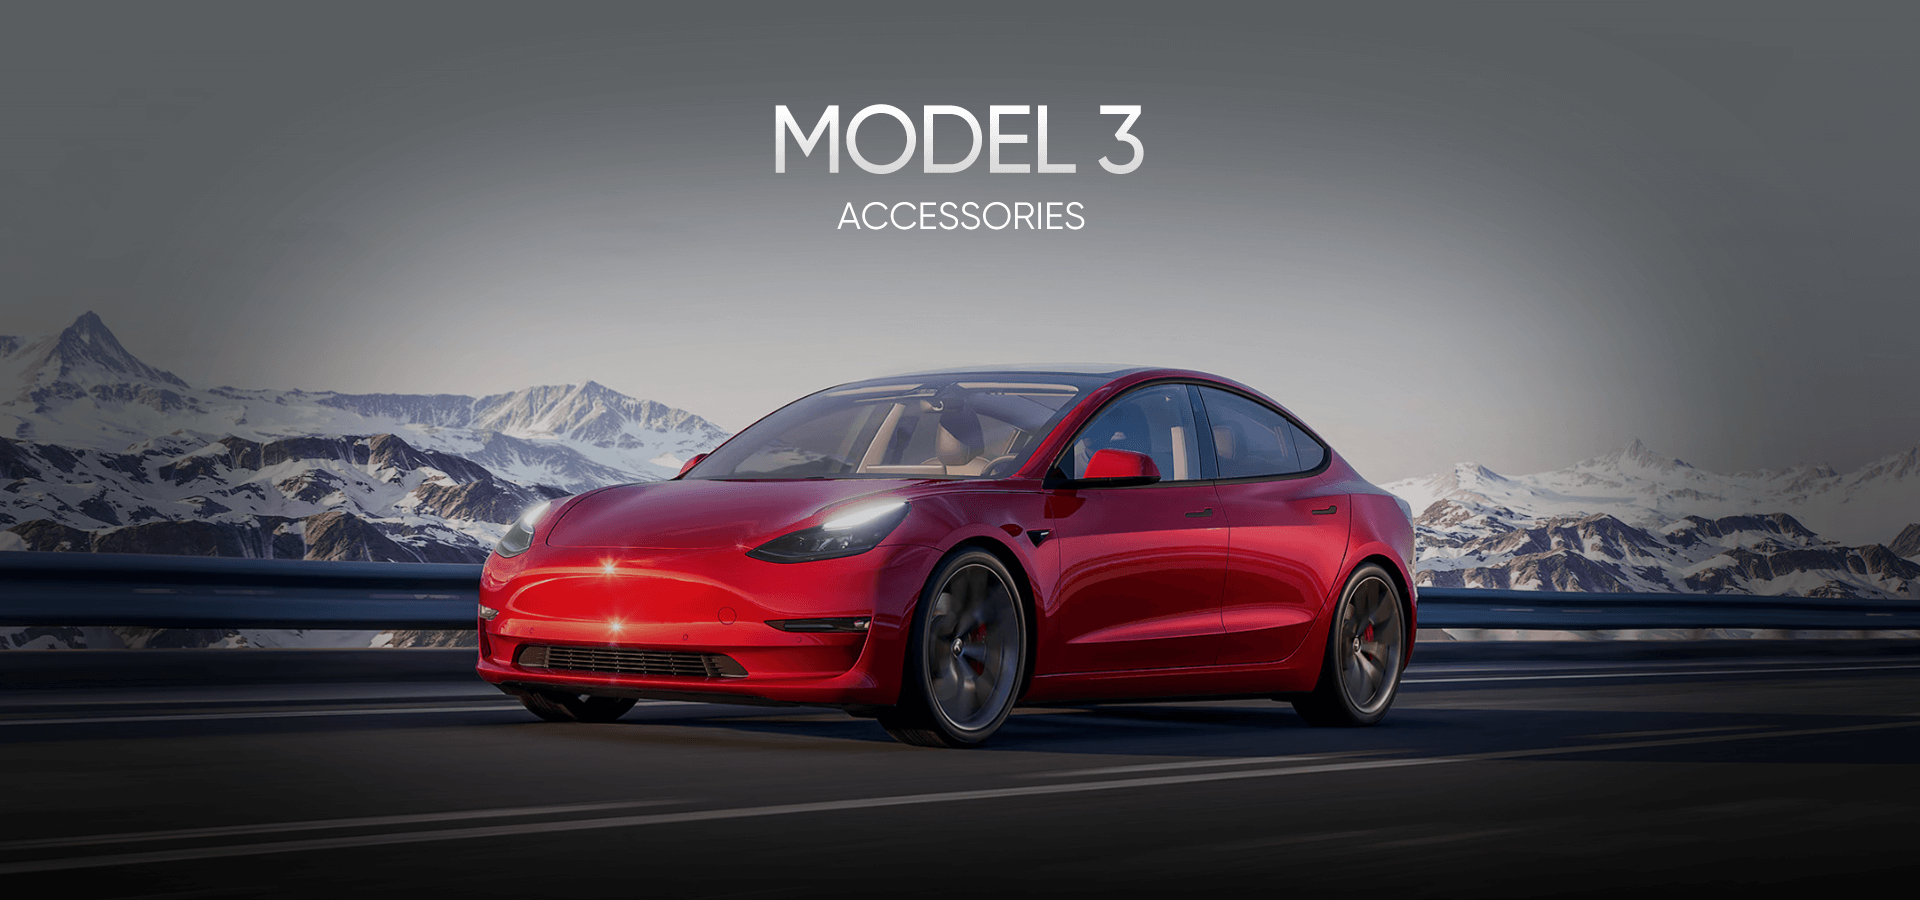 Premium Tesla Model 3 Accessories - Upgrade Your Ride